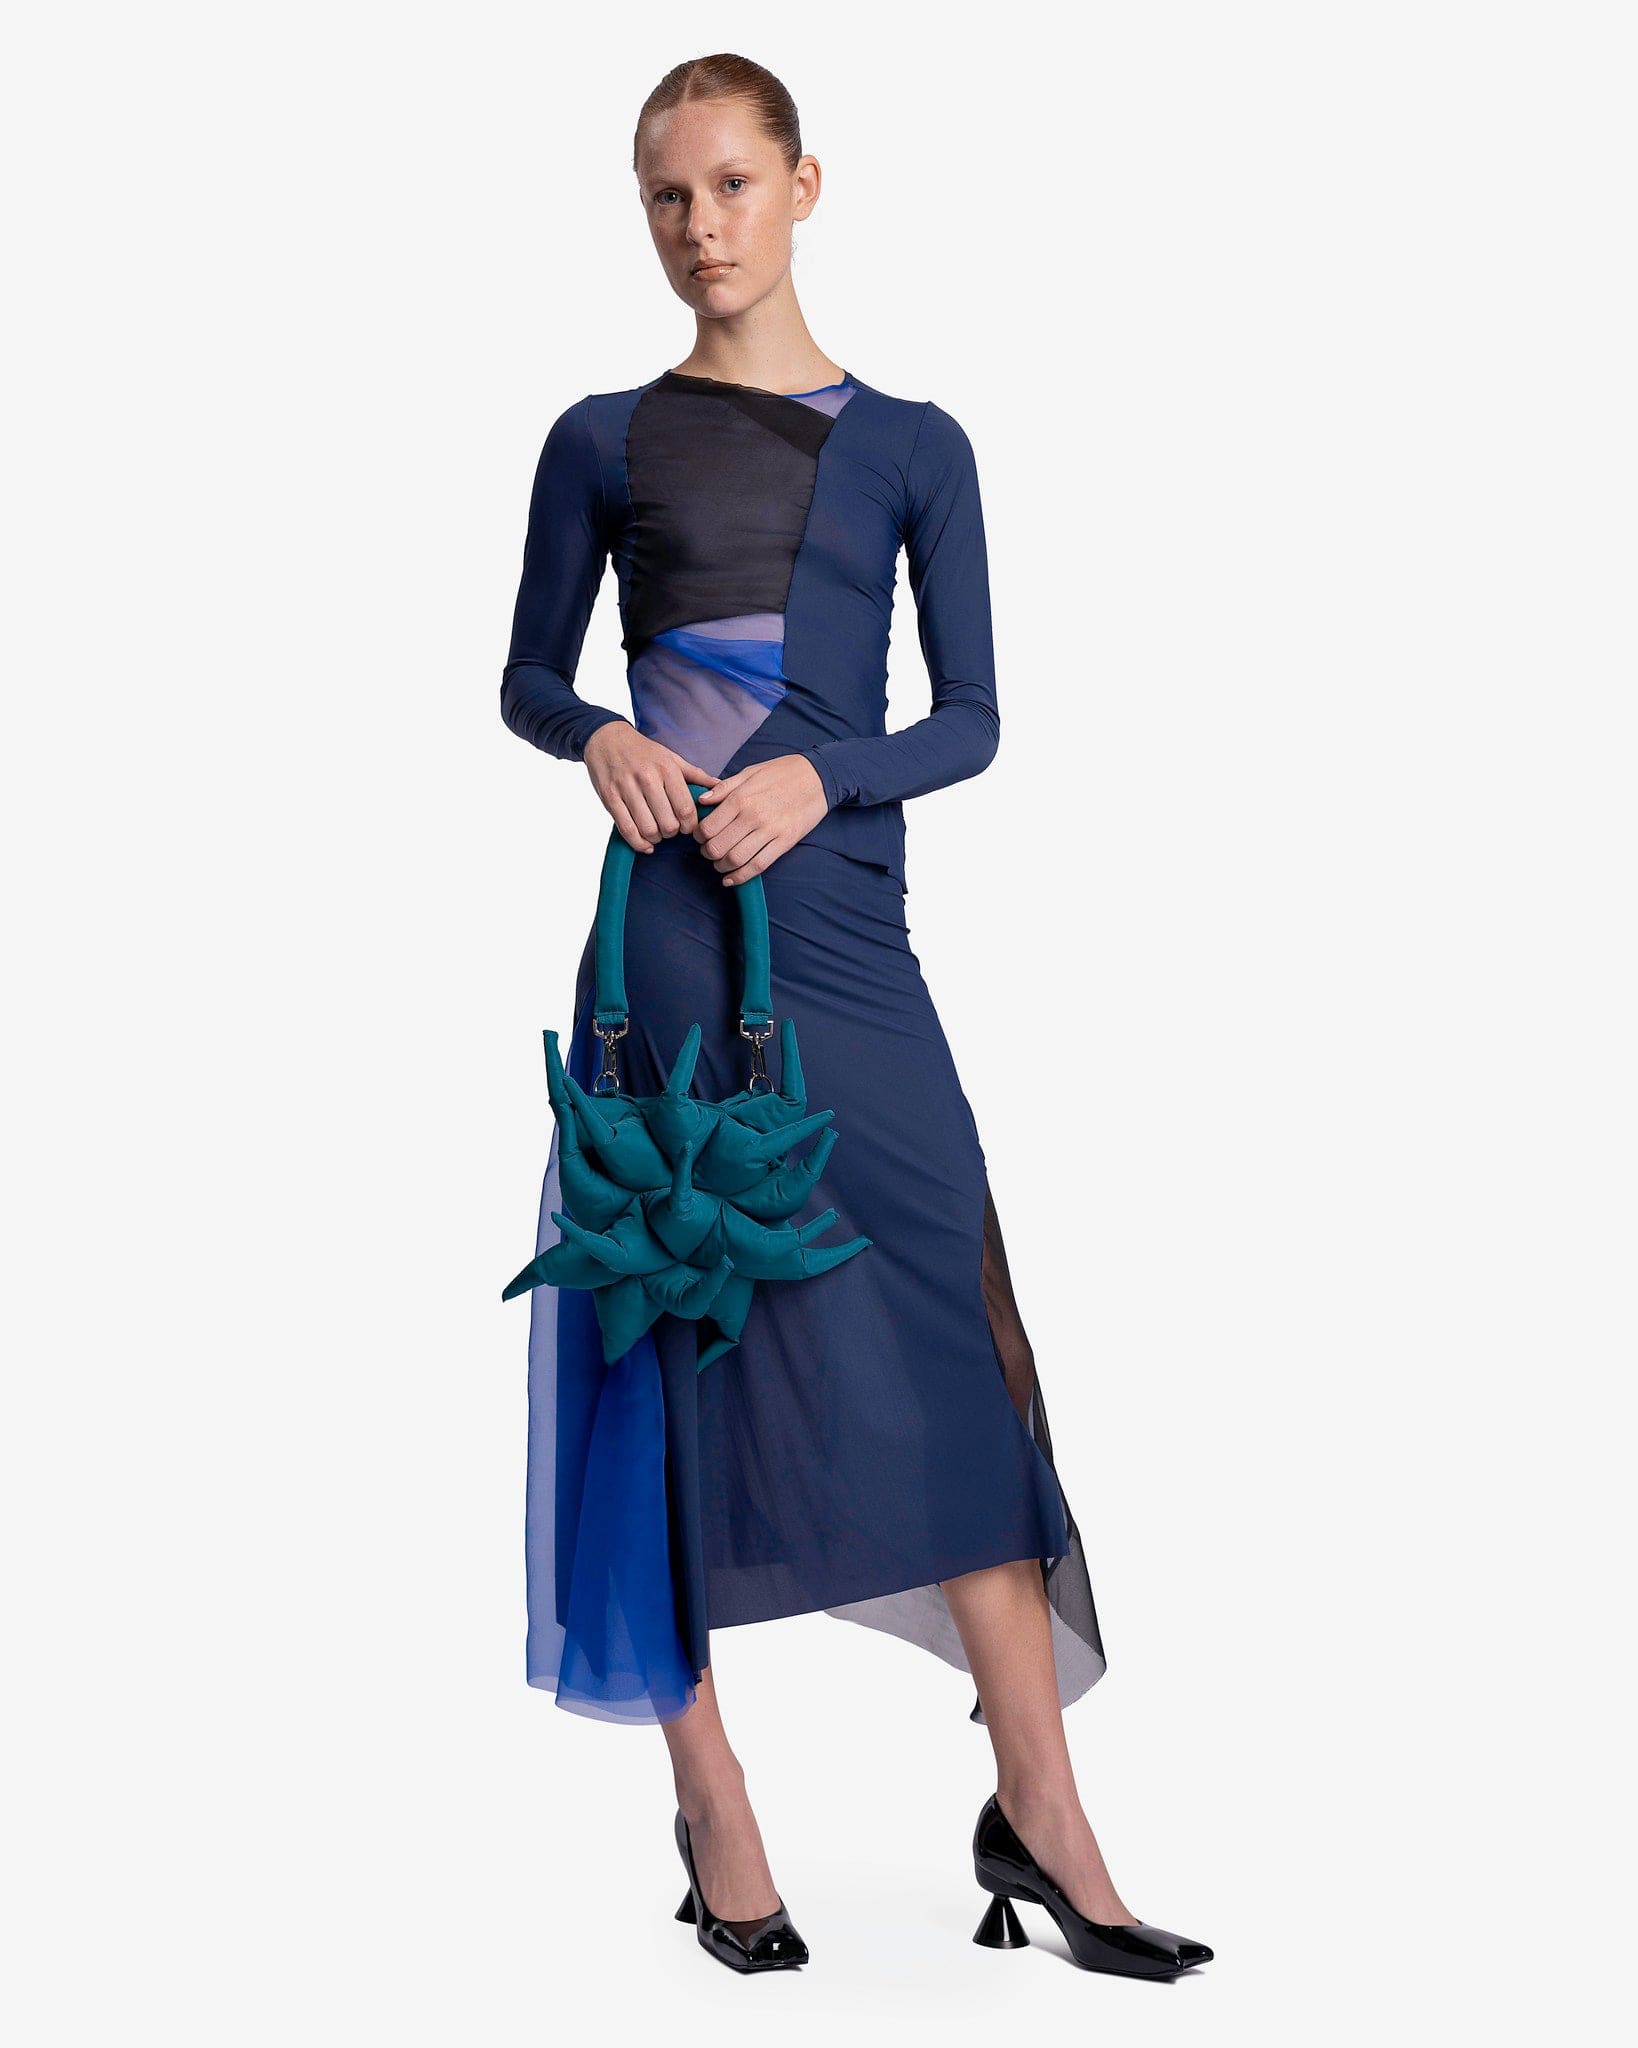 Paula Canovas Del Vas Women Skirts Woozy Skirt in Blue/Black - RECEIVED